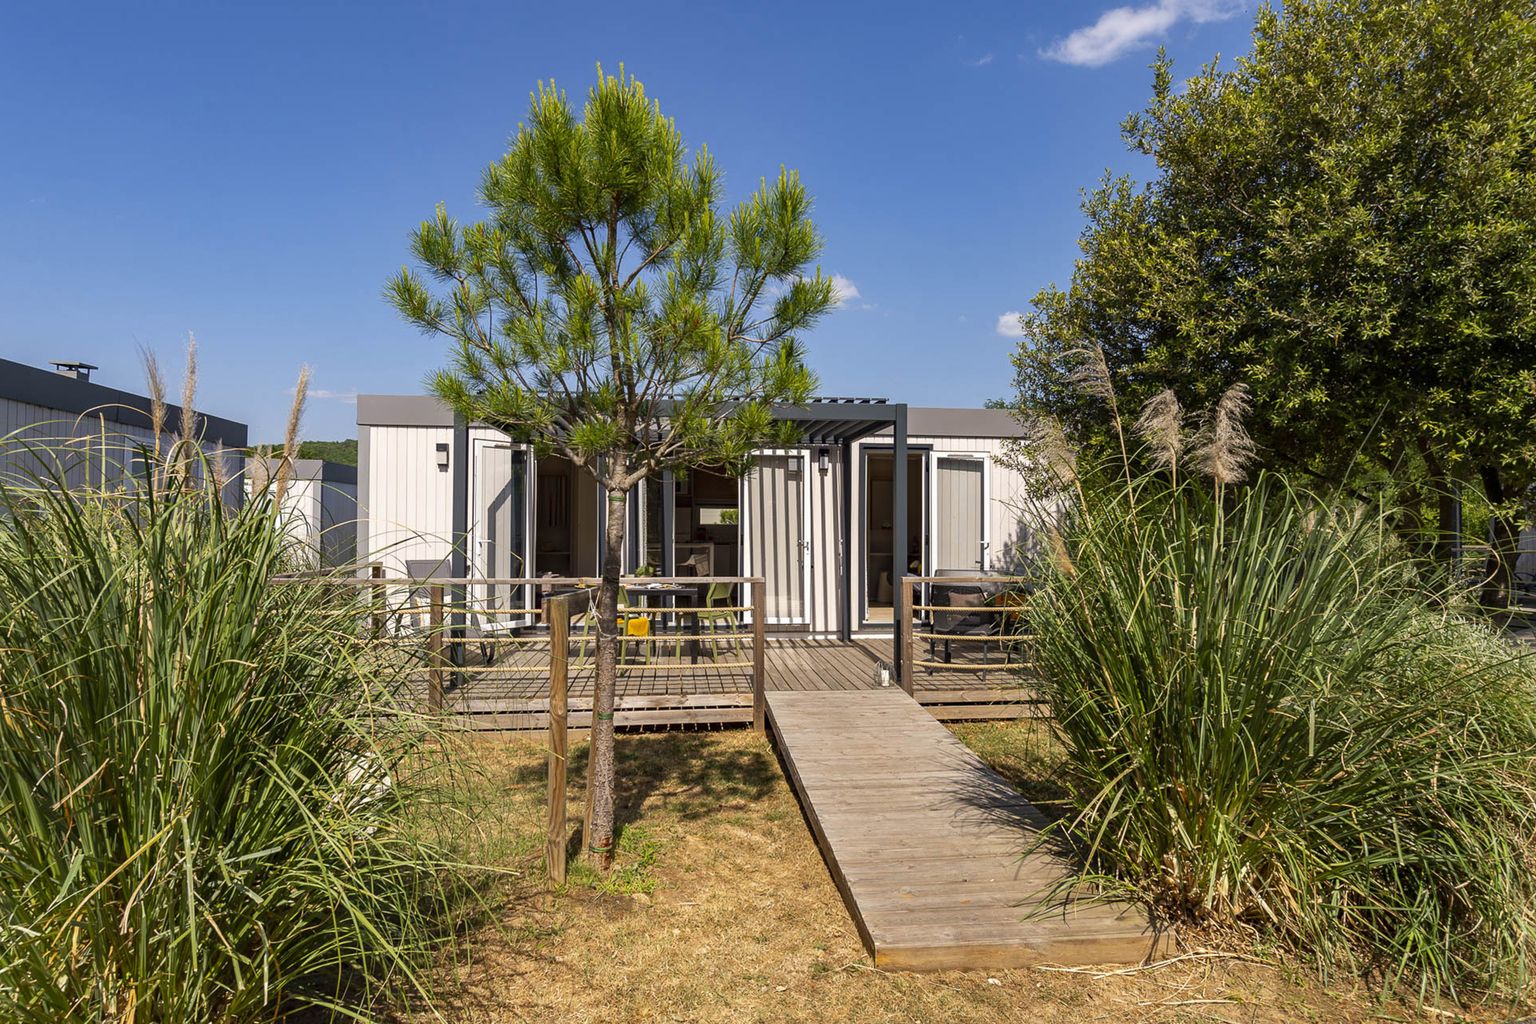 Mietunterkunft - Cottage Arizona 2 Zimmer Premium - Camping Sandaya Soleil Vivarais